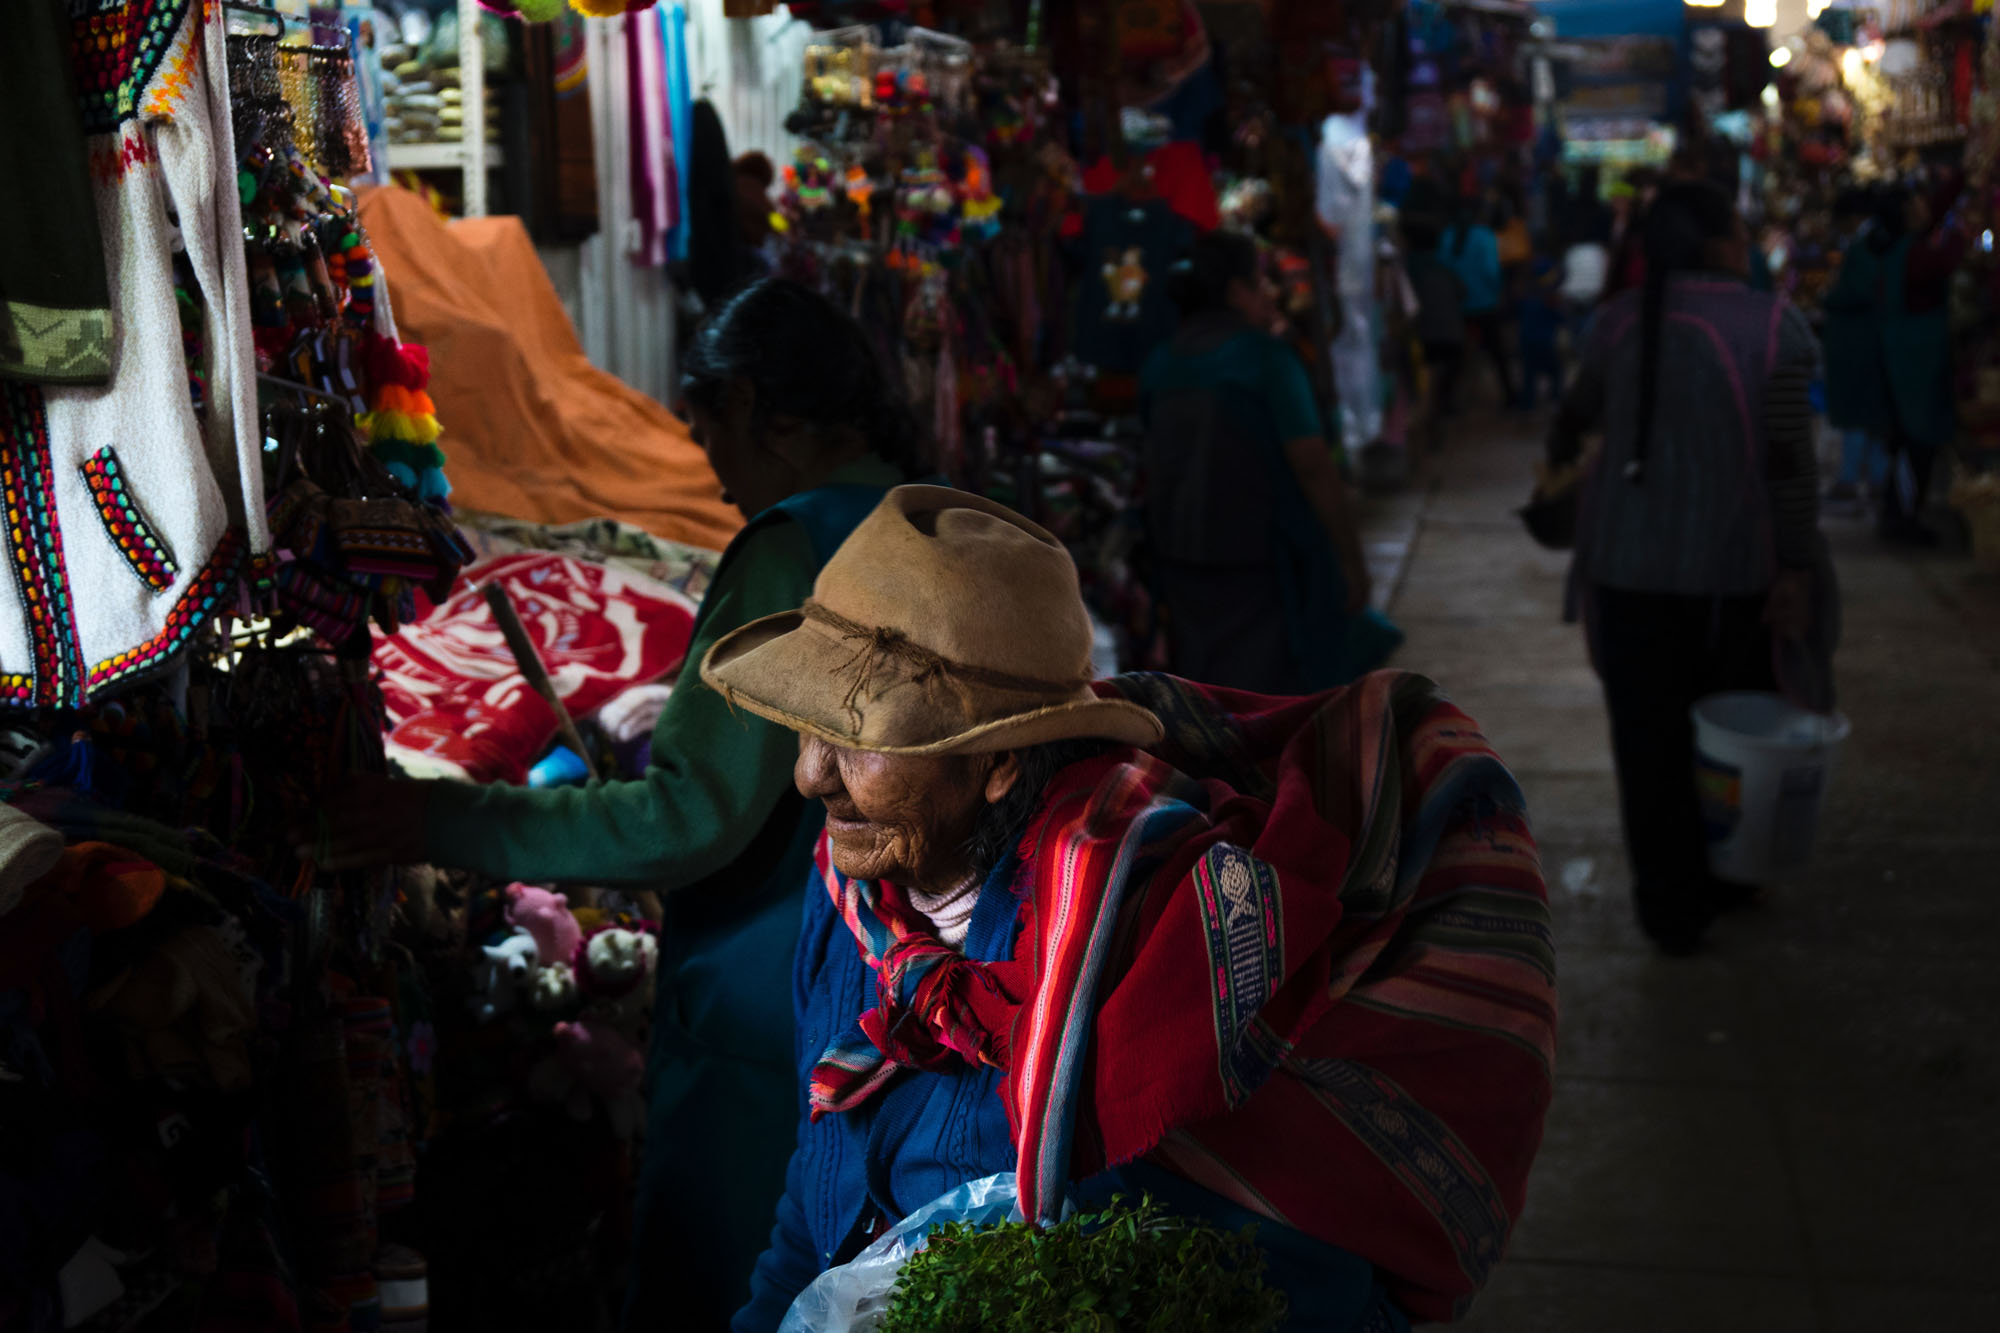 Mercado Central de San Pedro in Cusco, Peru